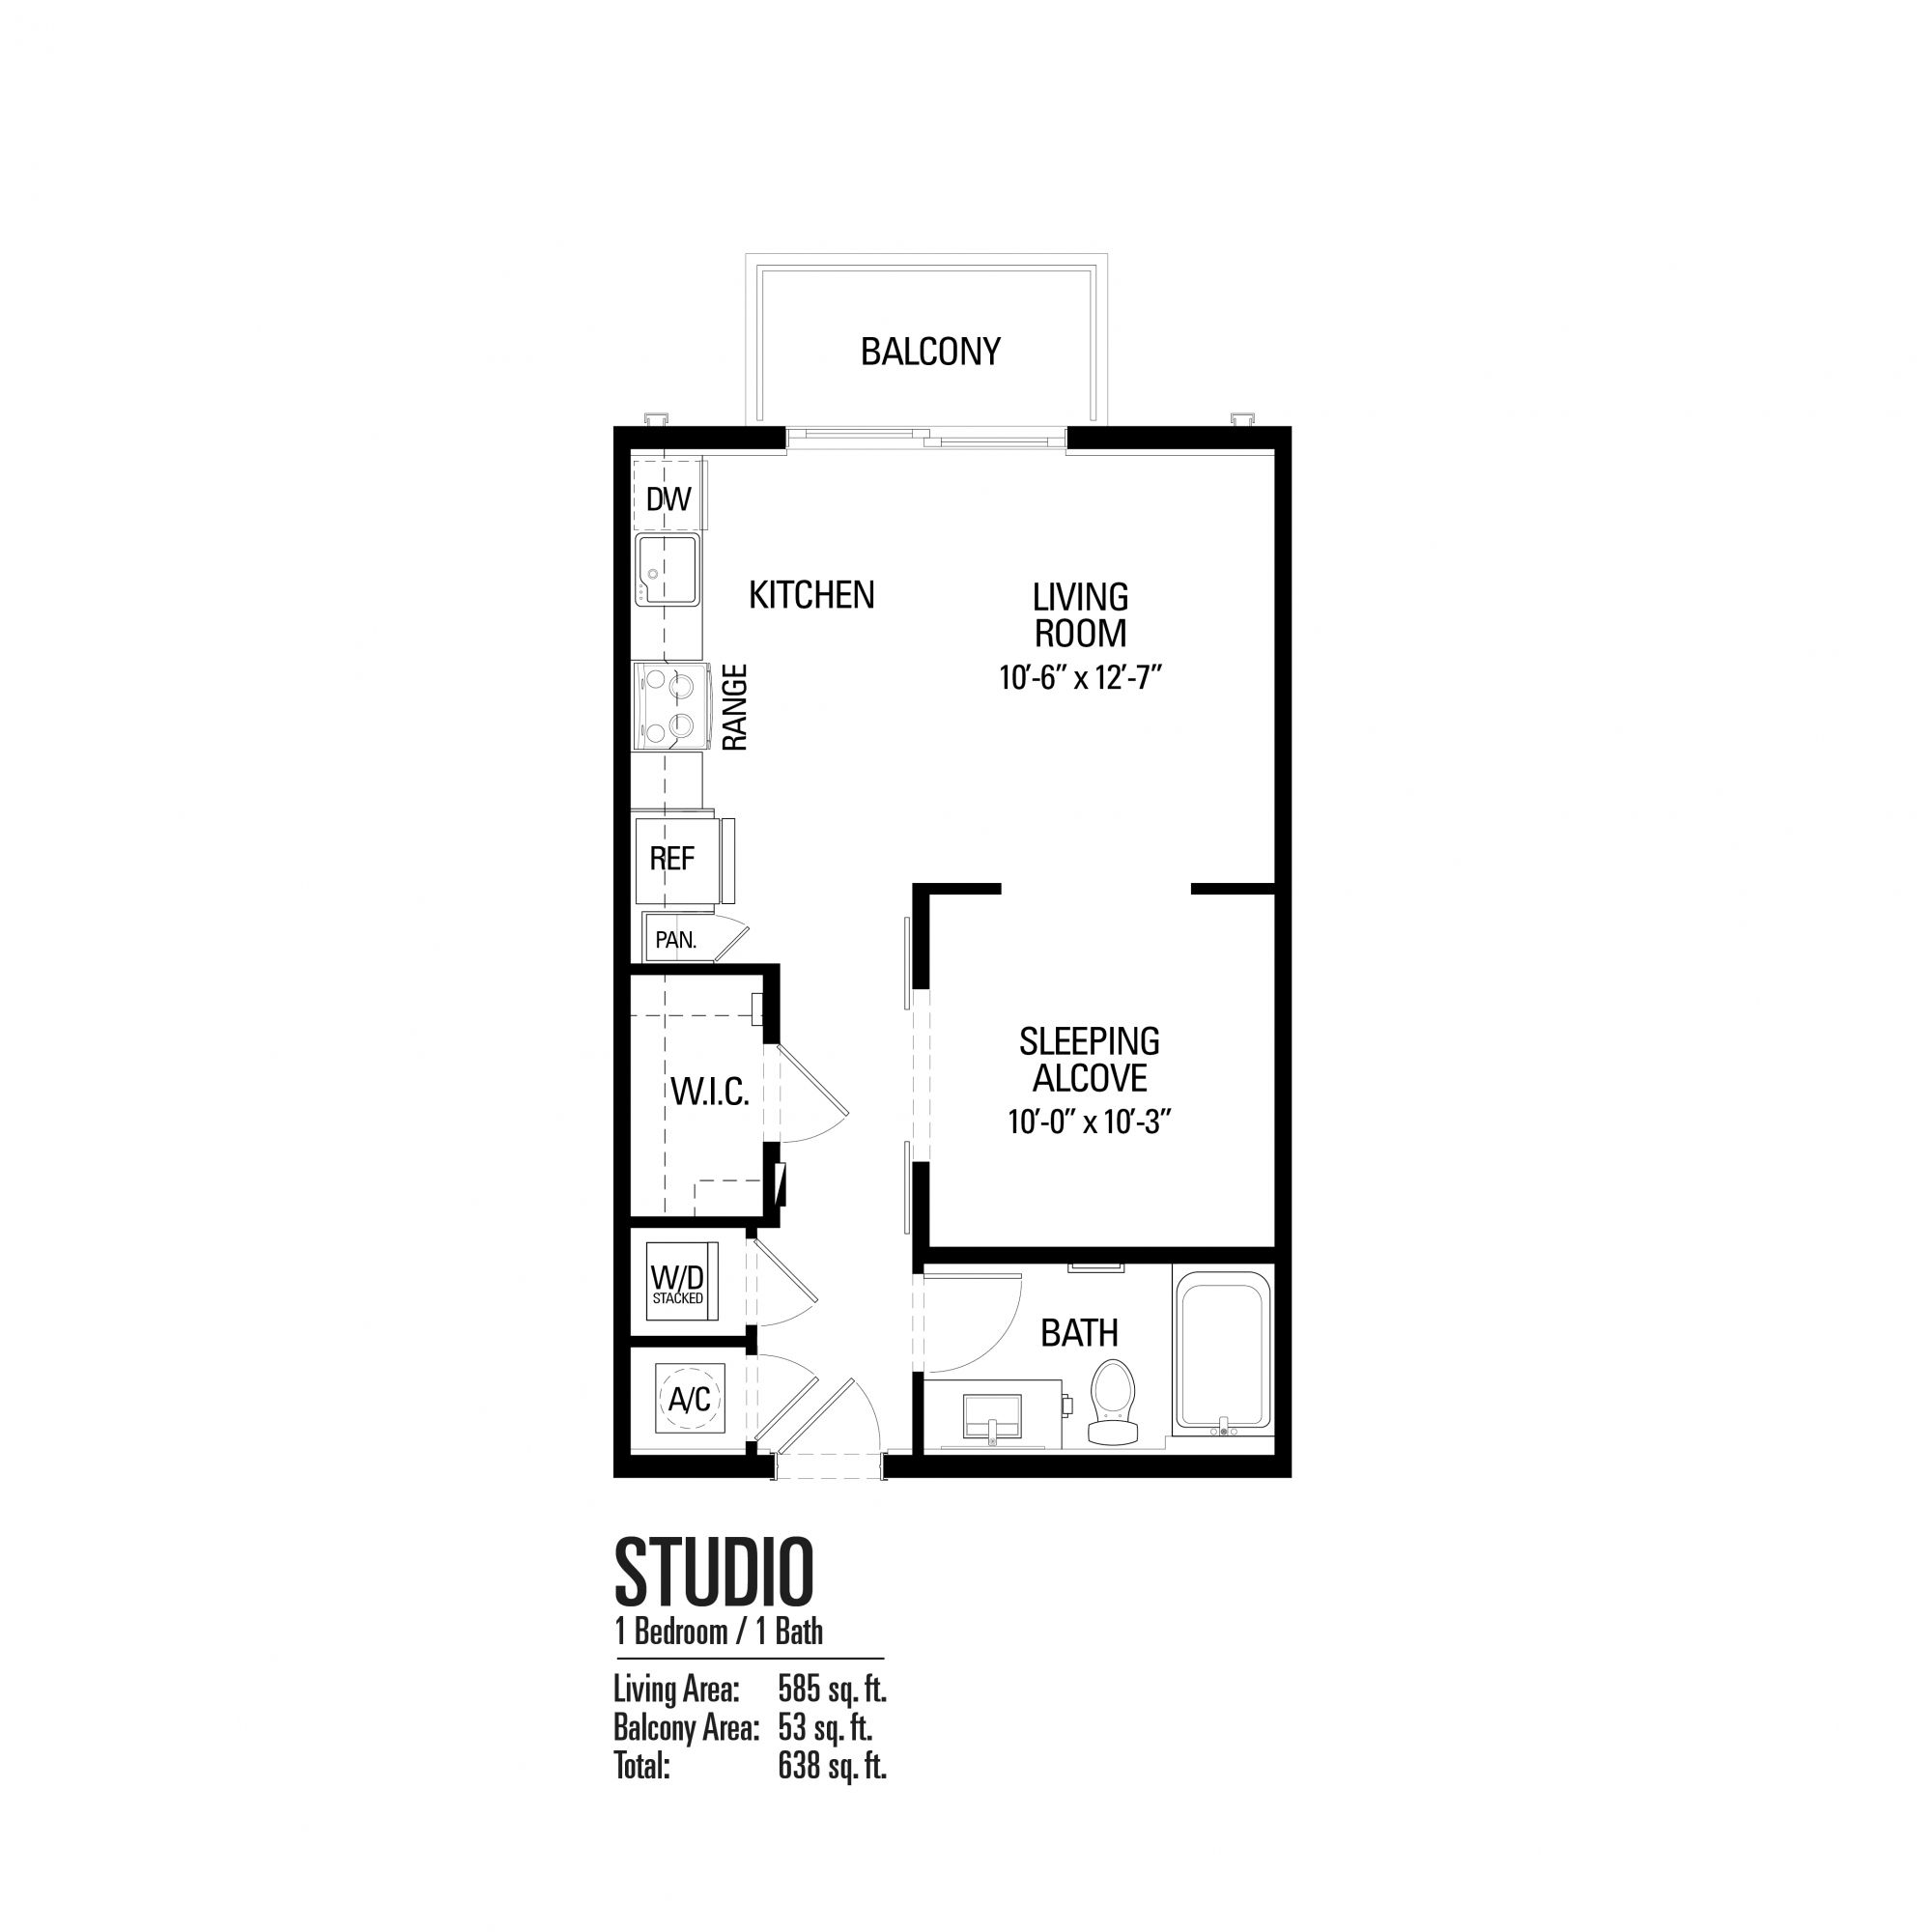 View Indigo Station Apartment Floor Plans Studios, 1, 2